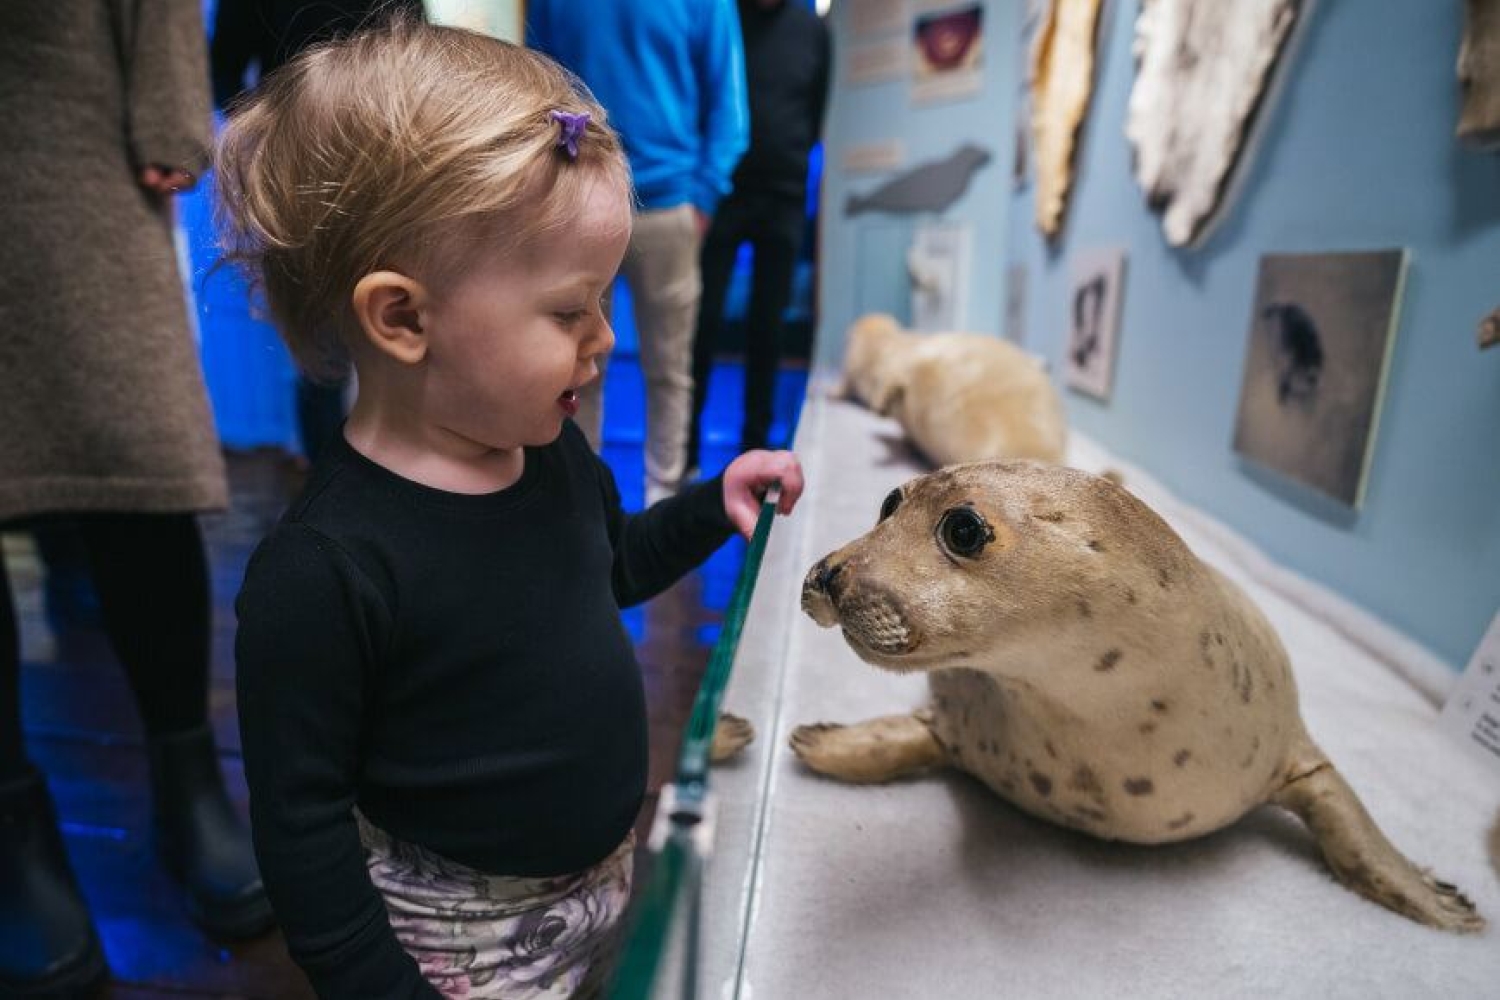 Barn studerer utstilling på Polarmuseet i Tromsø